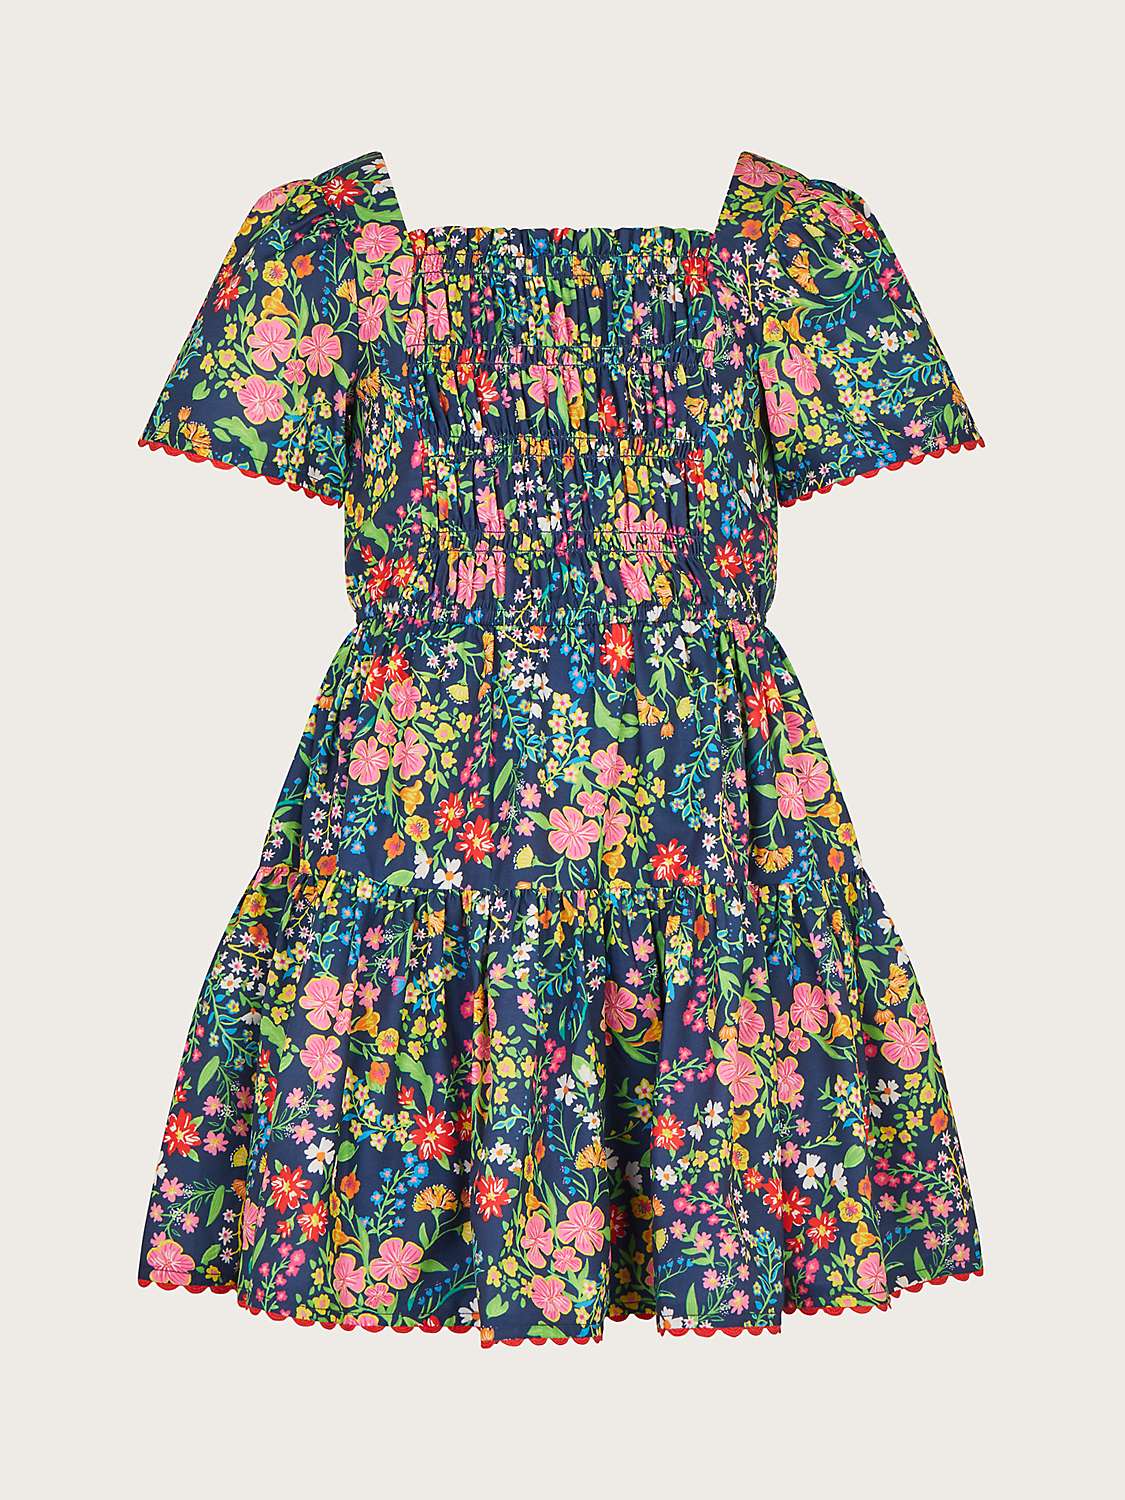 Buy Monsoon Kids' Paisley Floral Print Dress, Navy/Multi Online at johnlewis.com